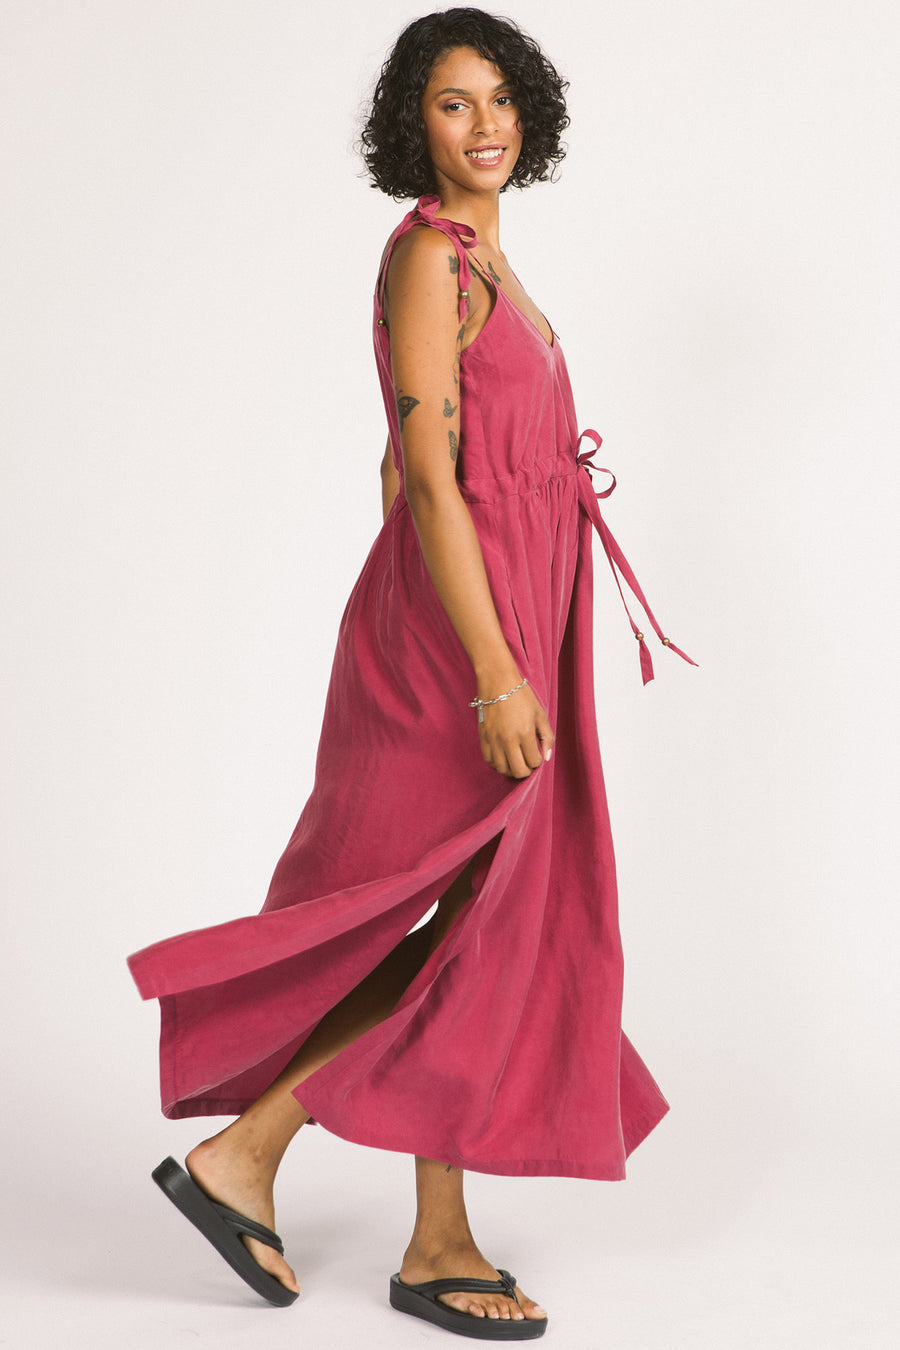 Side view of woman wearing magenta pink Novalie dress by Allison Wonderland with adjustable shoulder straps and waist. 